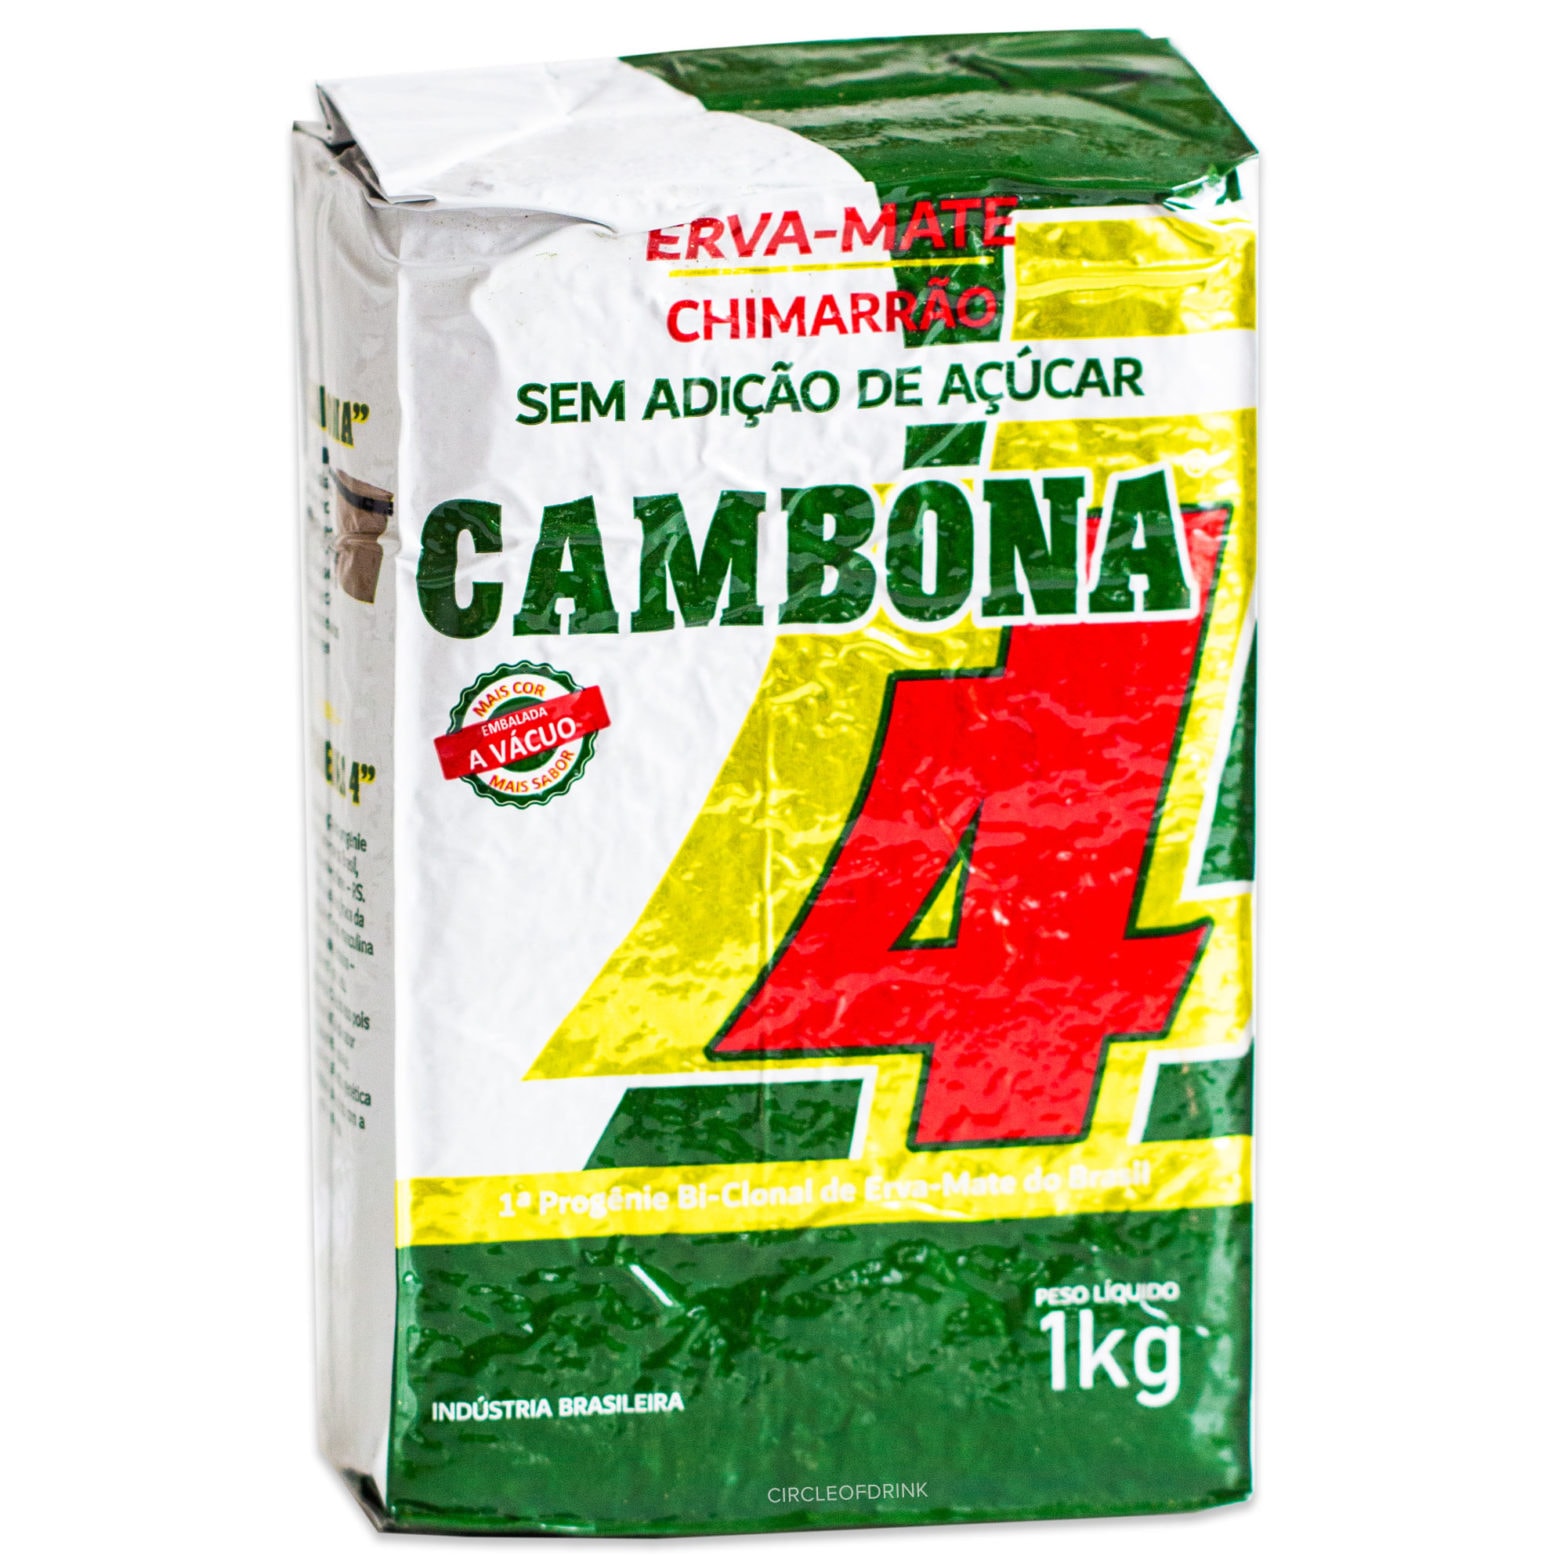 Cambona 4 Brazilian Erva Mate Tea - 1kg - 2.2lb - Vacuum Sealed